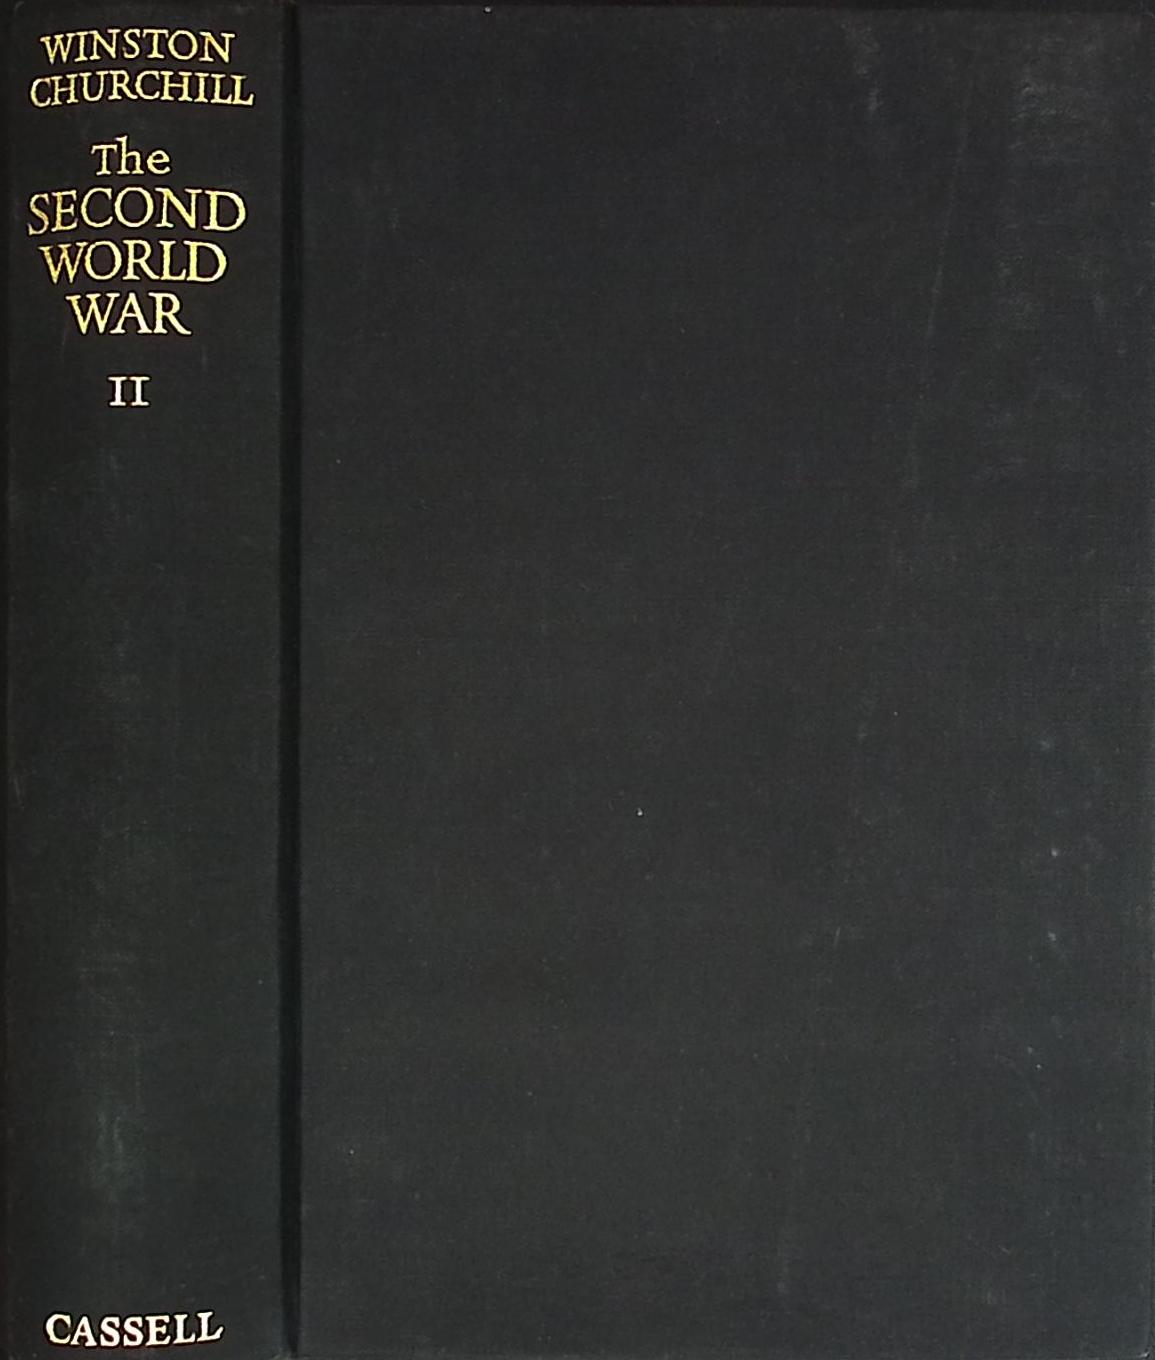 The Second World War. Volume 2, Their Finest Hour. Cassell edition.